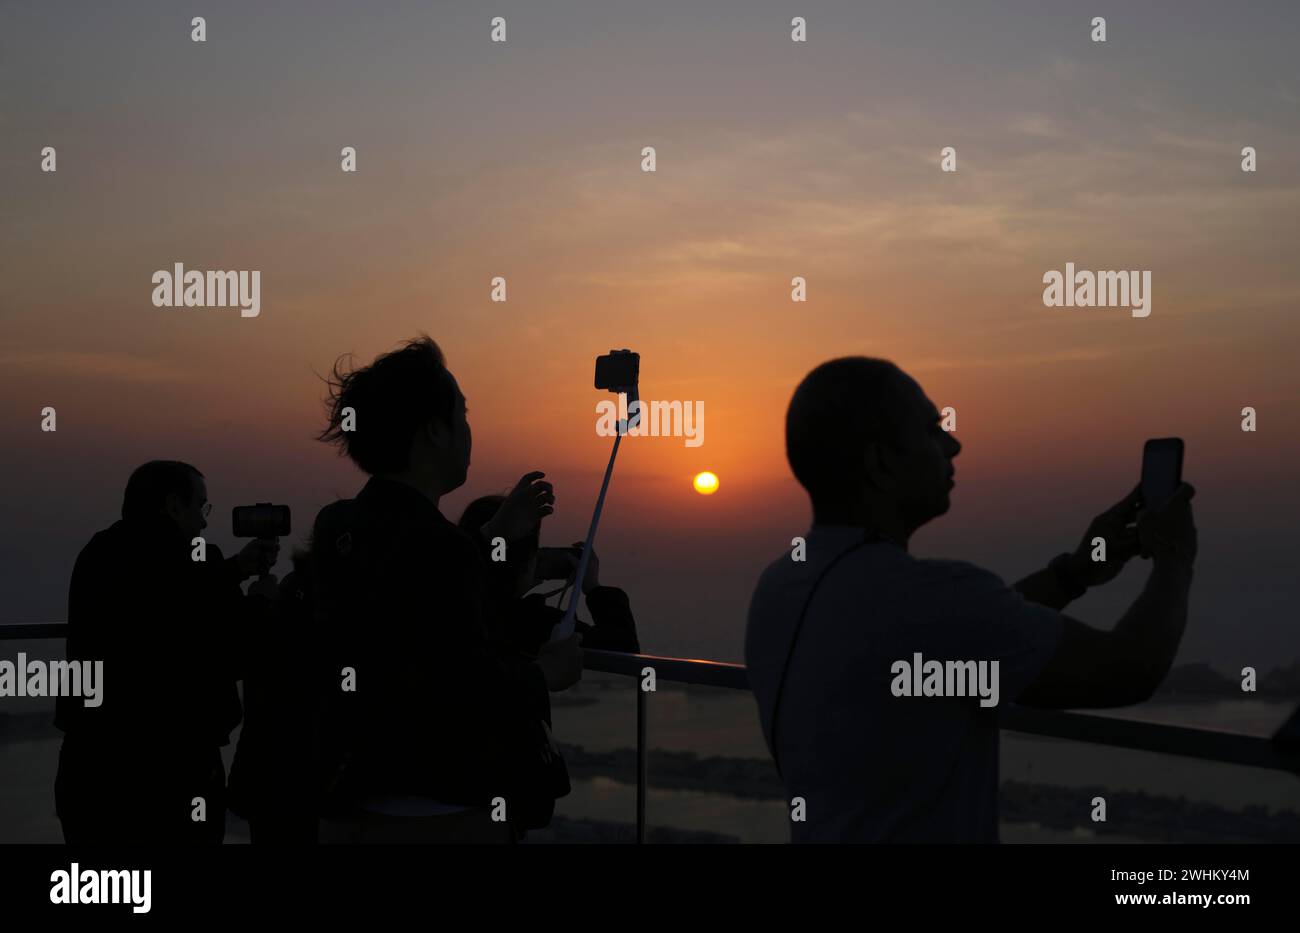 I turisti scattano selfie con smartphone, bastone per selfie, The View at the Palm, Palm Jumeirah, tramonto, atmosfera serale, Dubai, Emirati Arabi Uniti, VAR Foto Stock